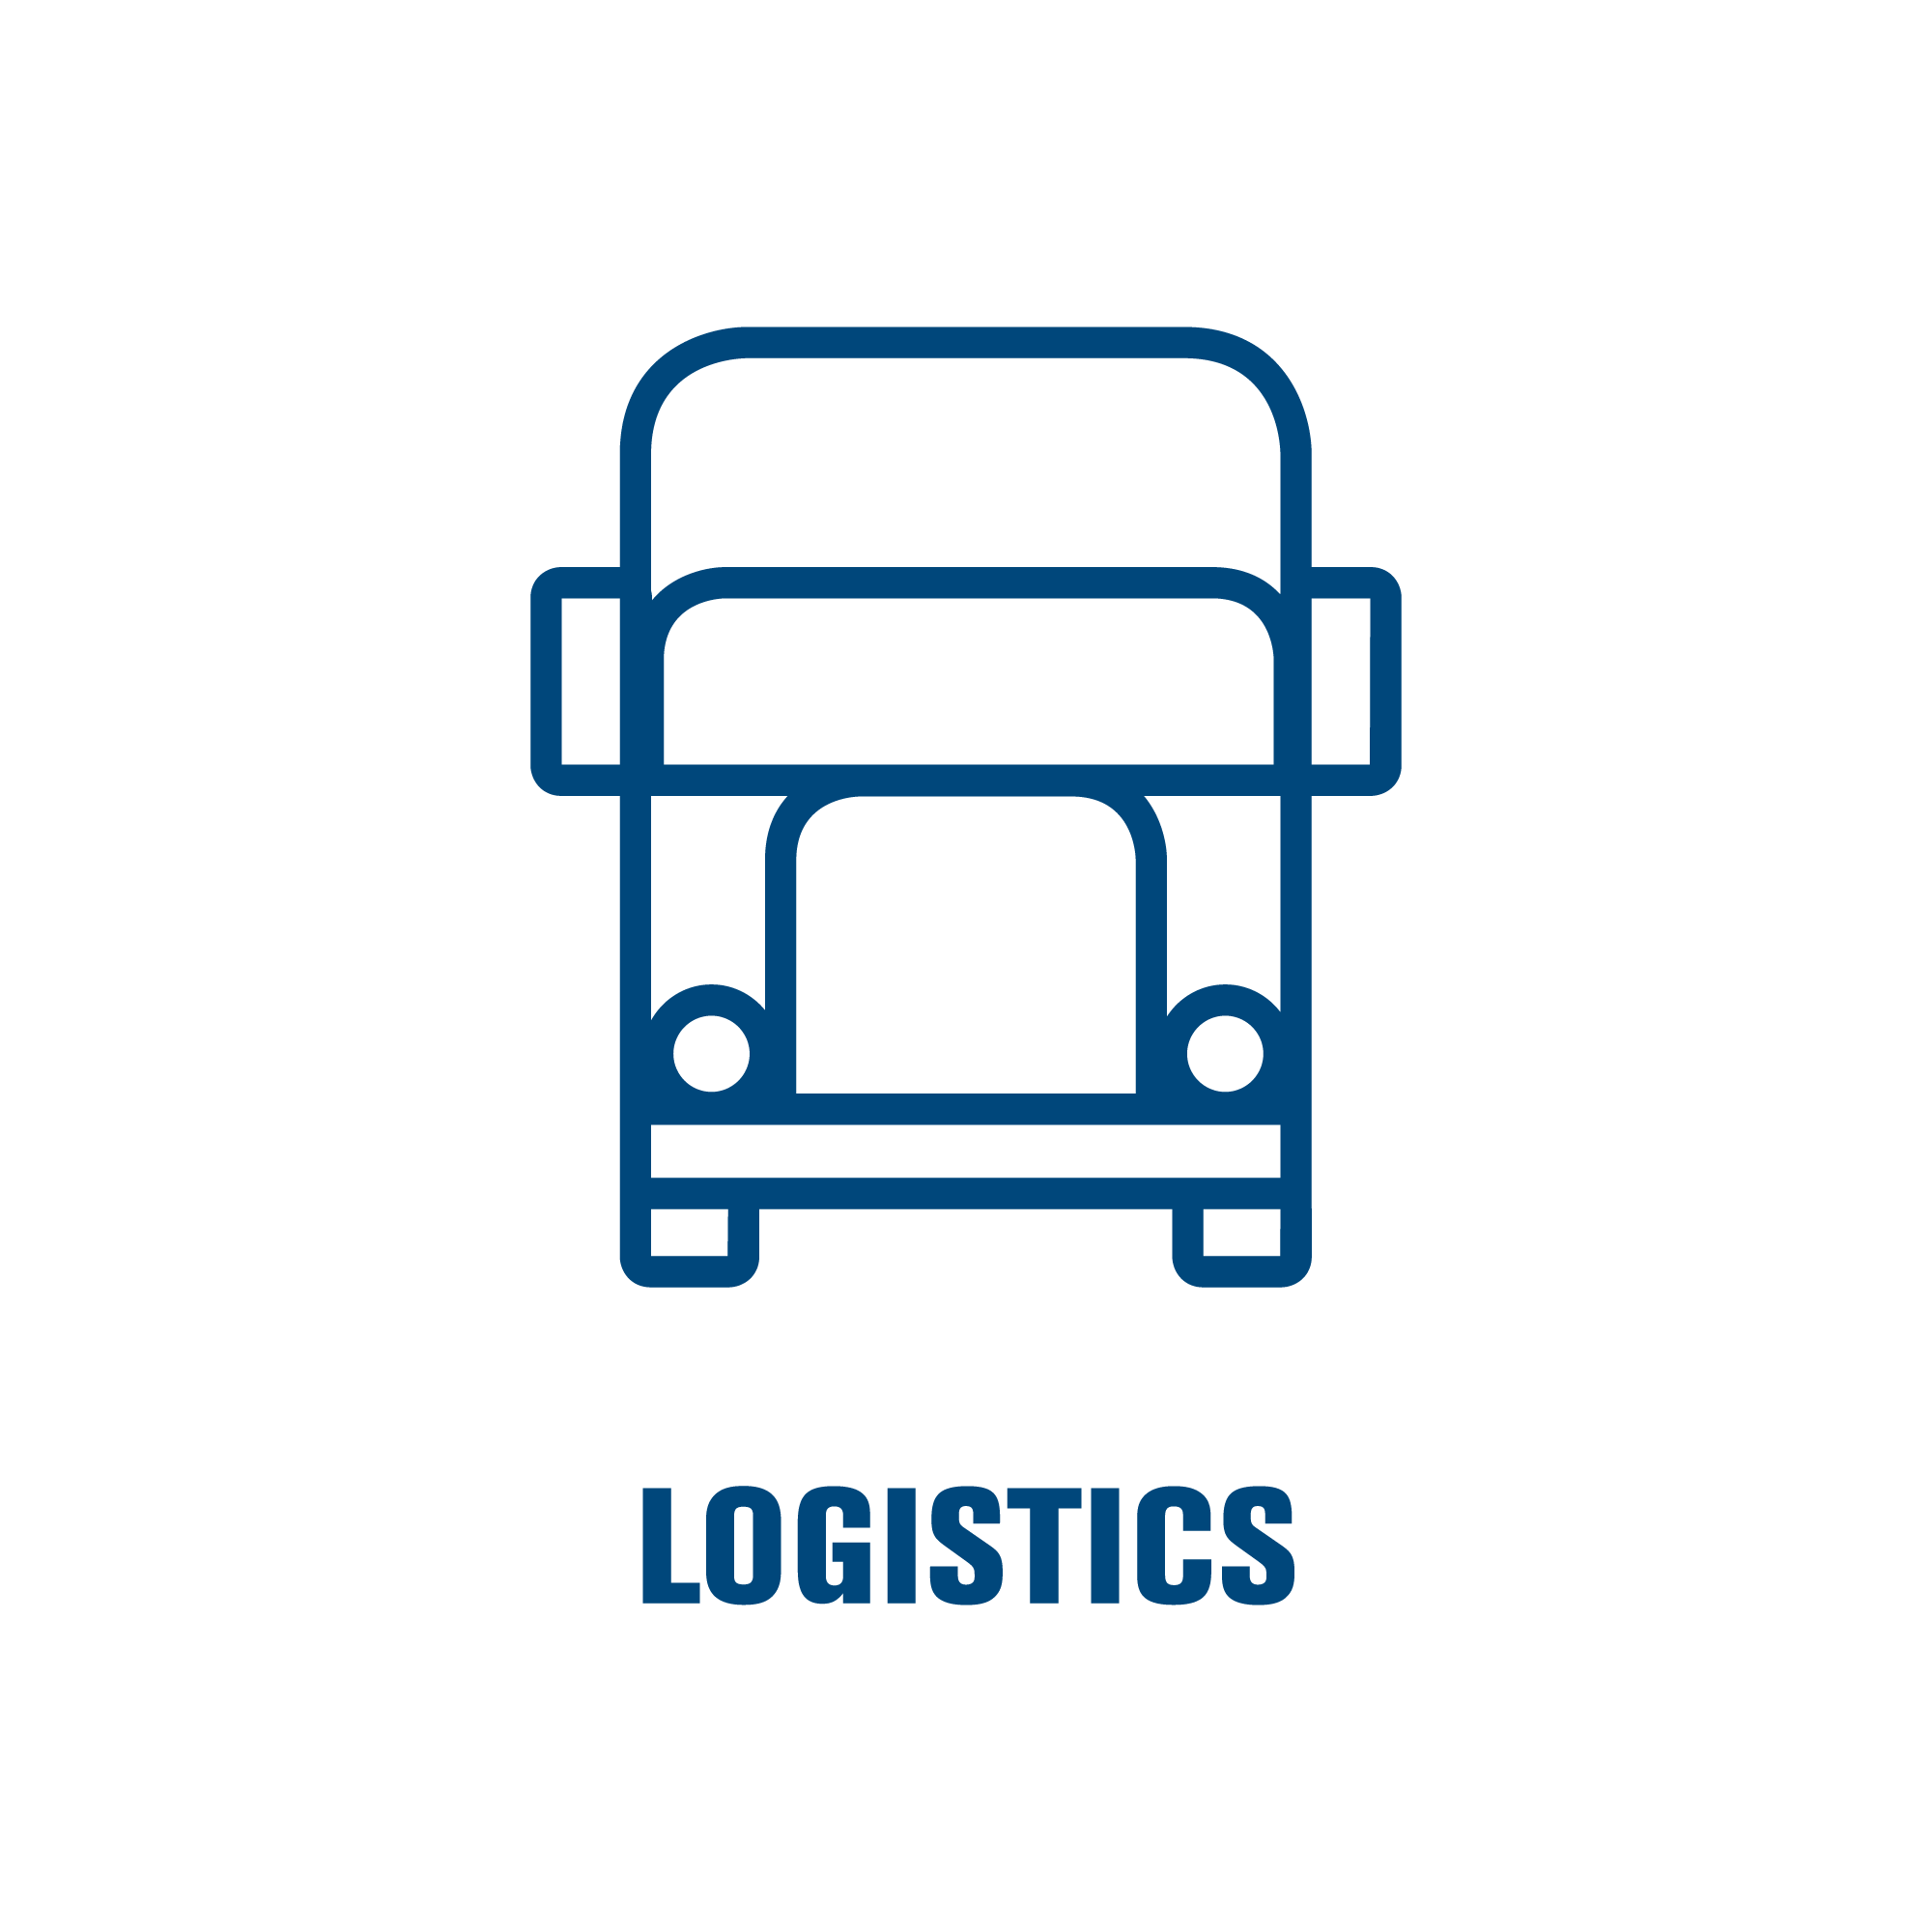 Logistics Blue